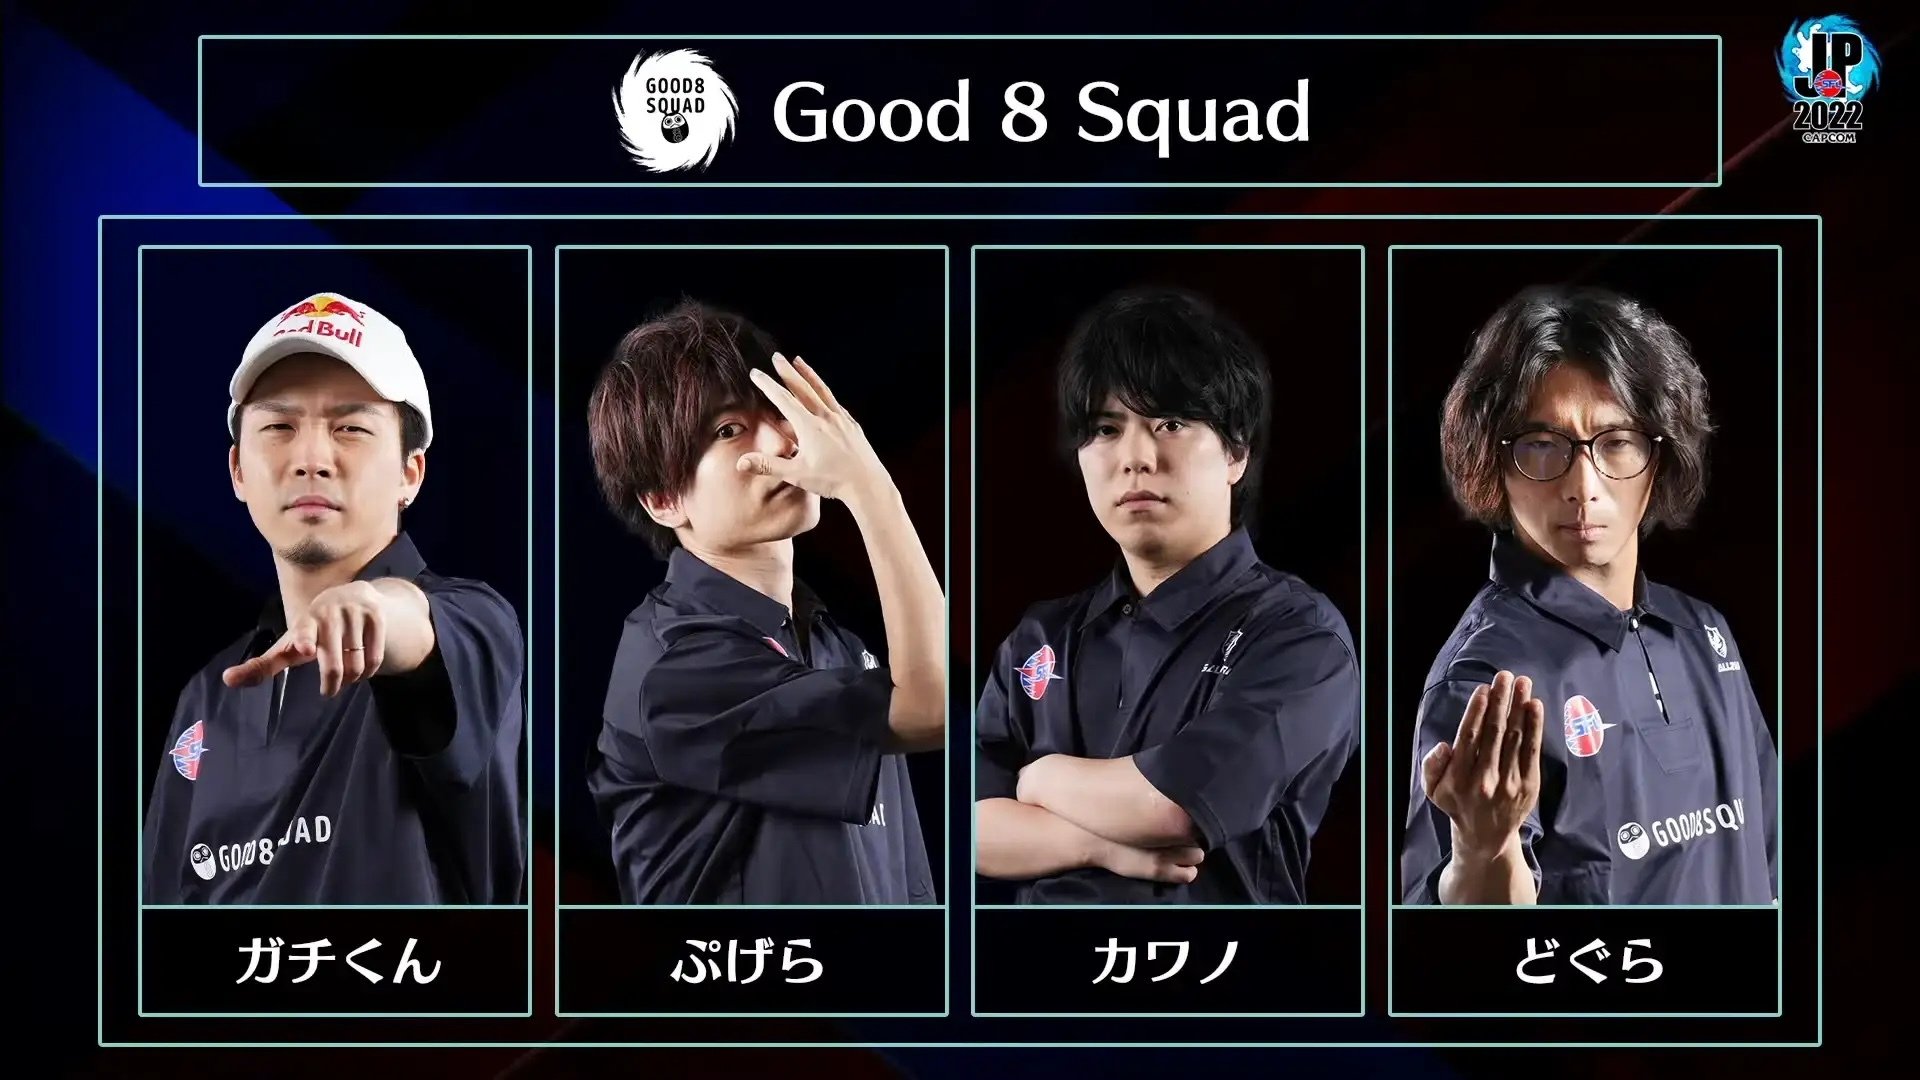  Good 8 Squad